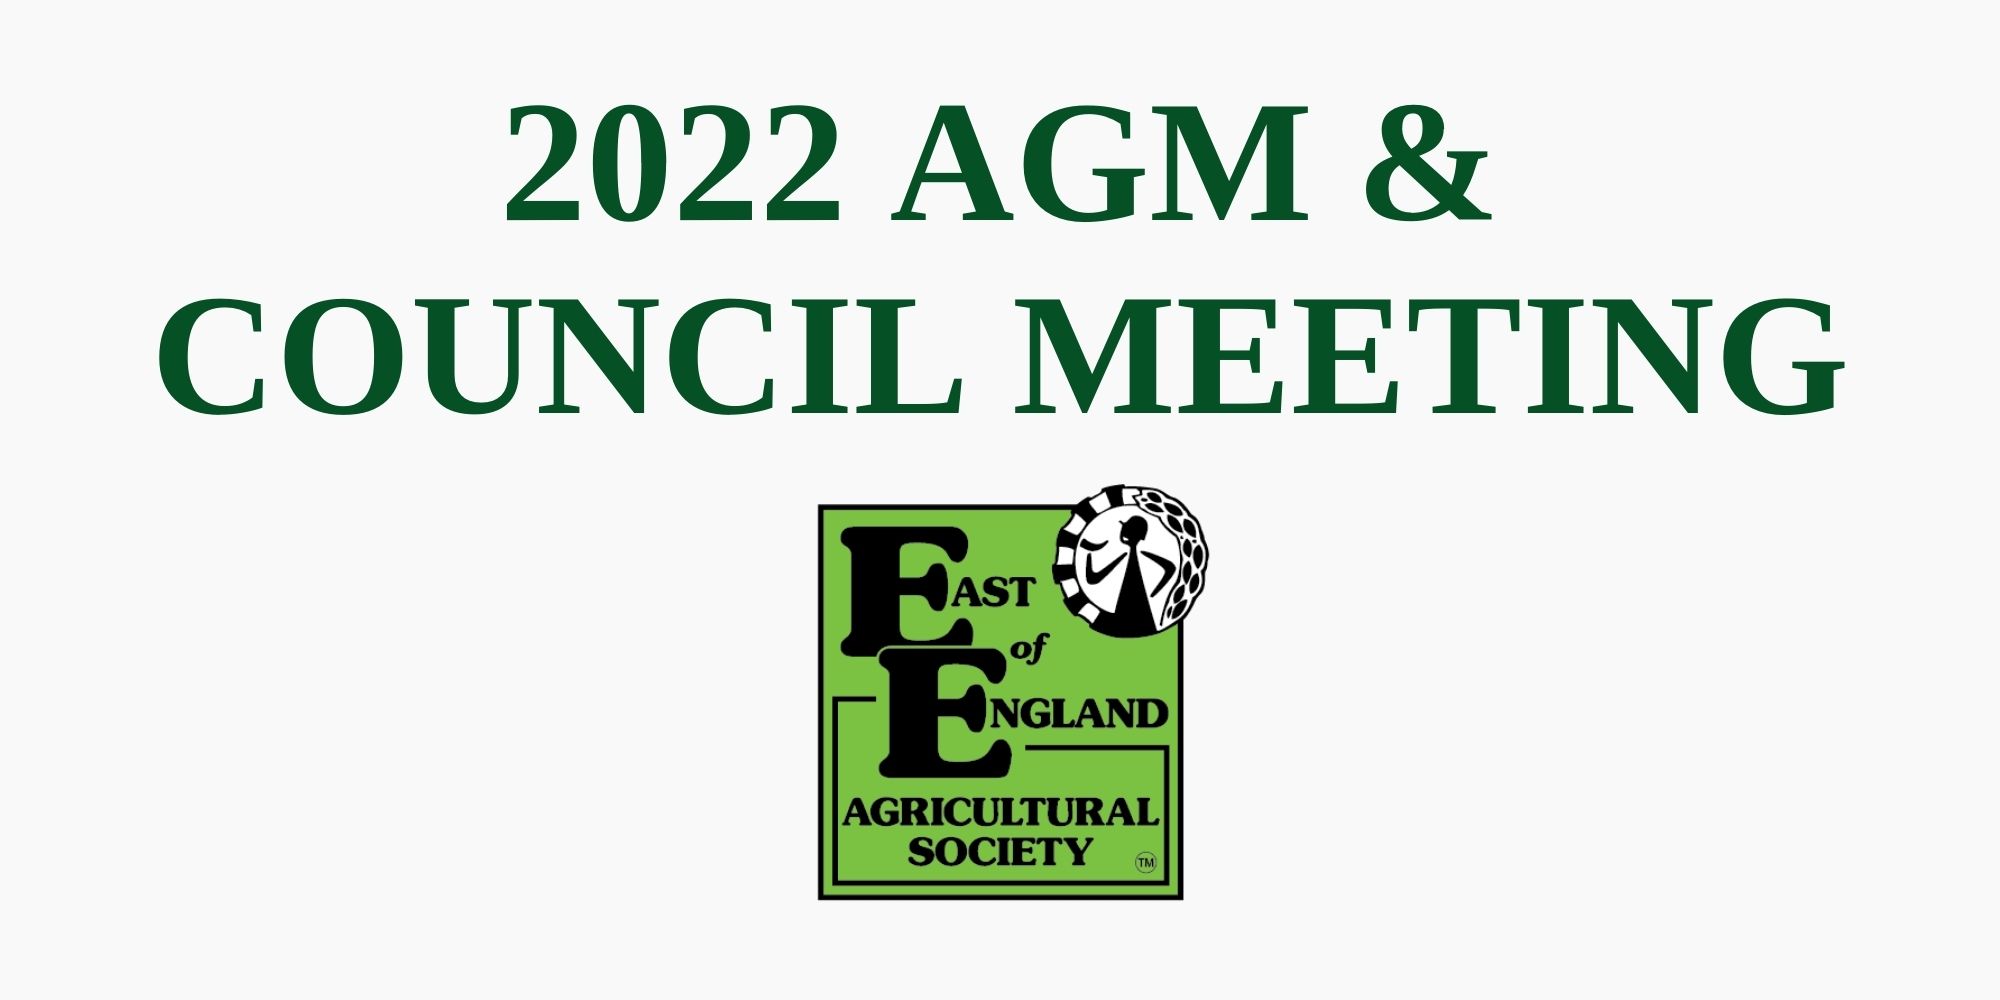 2022 AGM & Council Meeting